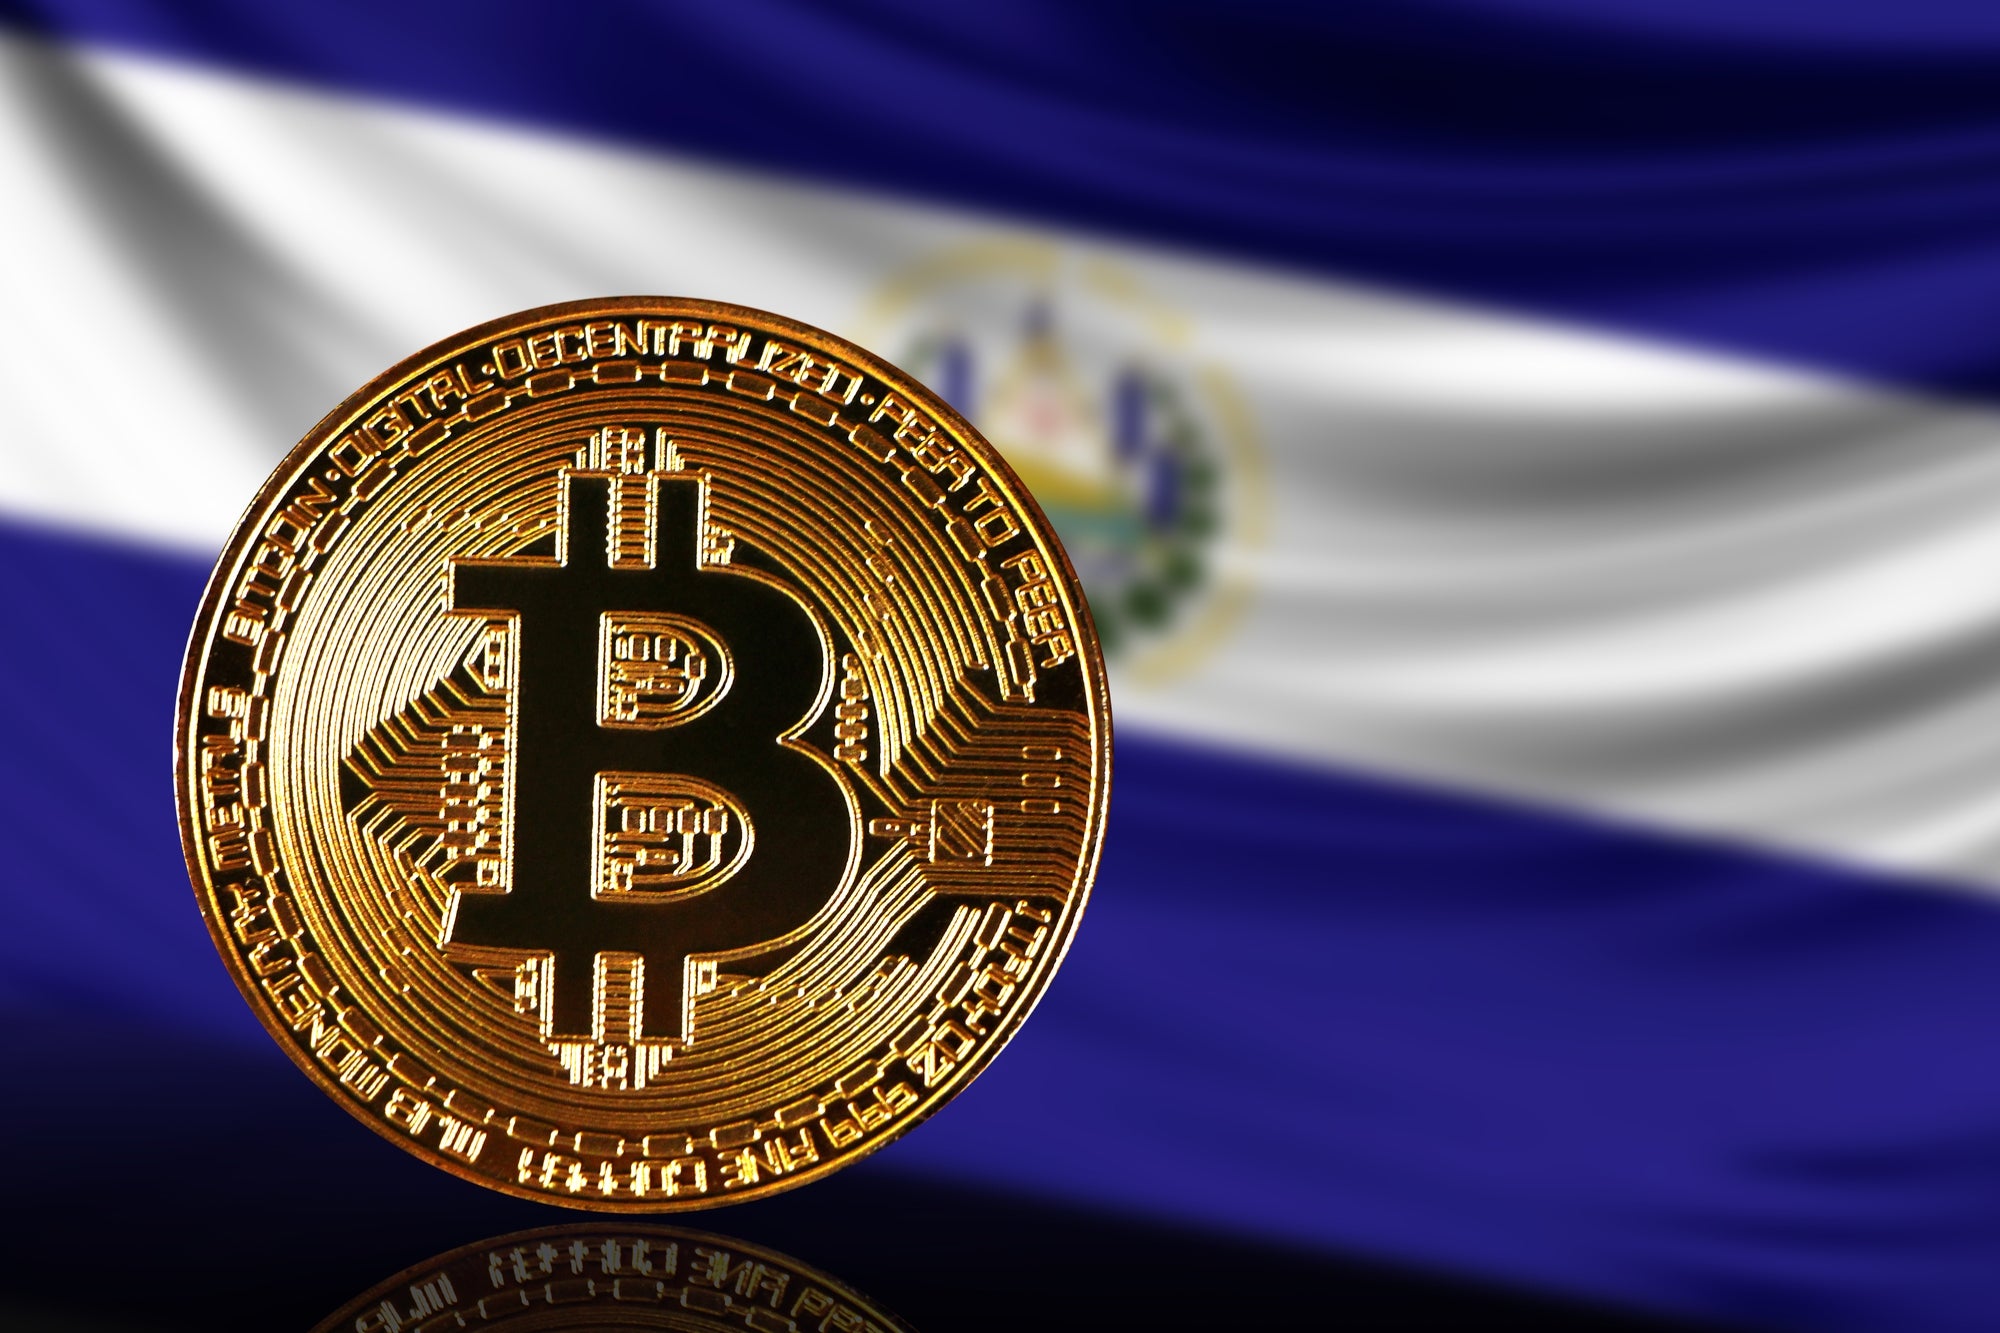 „El Hormiguero“ ir „Bitcoin“ - ar ši programa rekomendavo investuoti į kriptovaliutas?